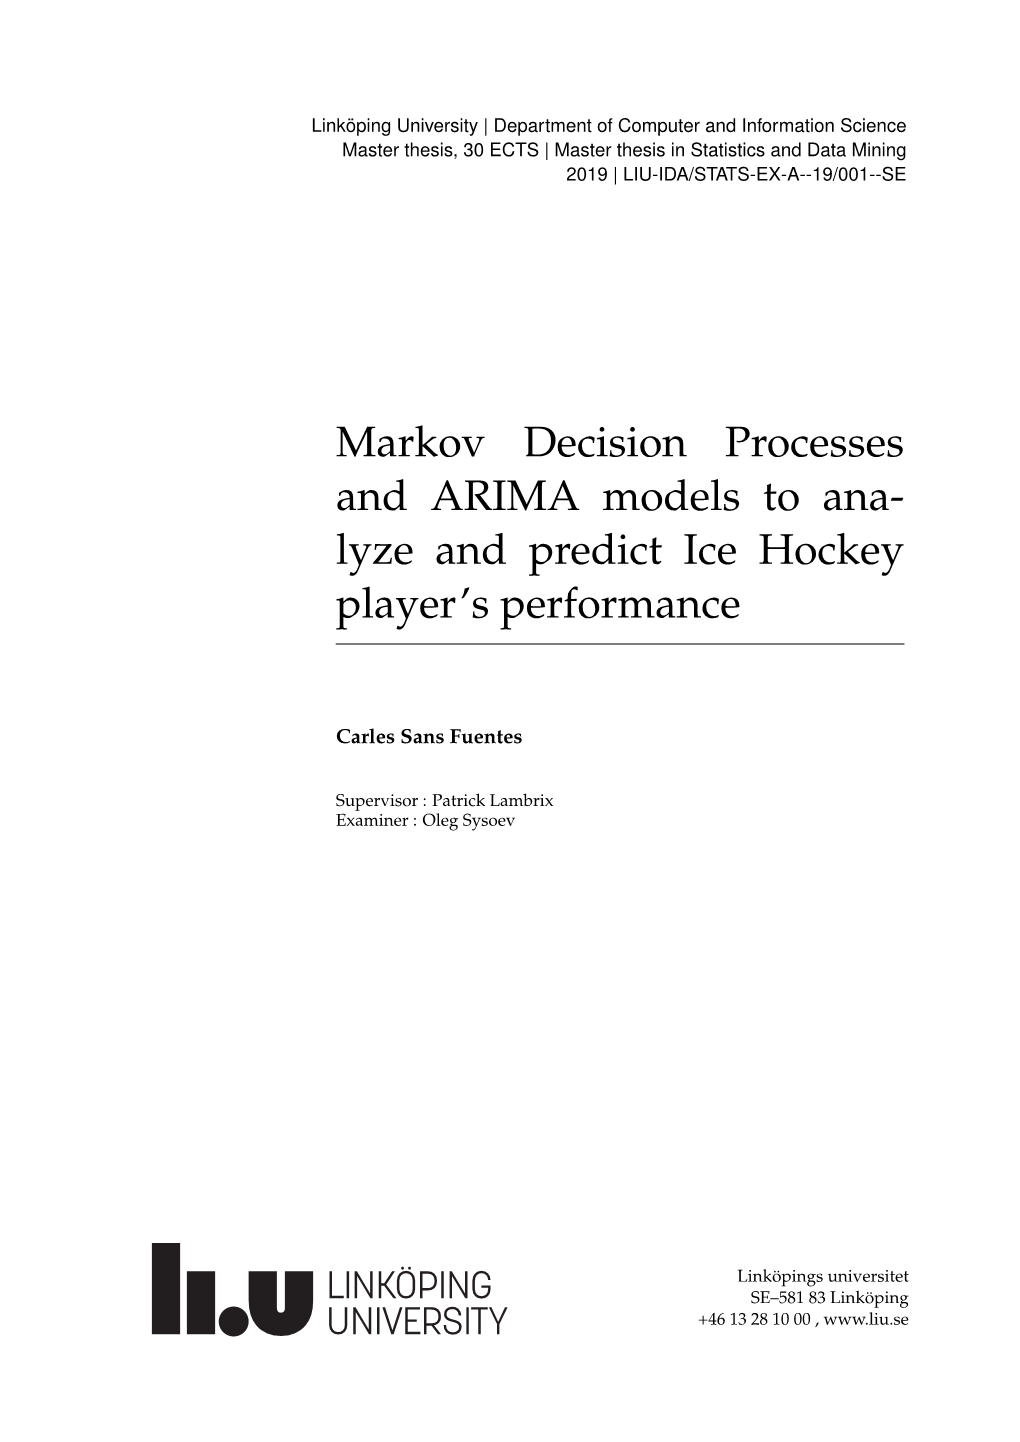 Lyze and Predict Ice Hockey Player's Performance